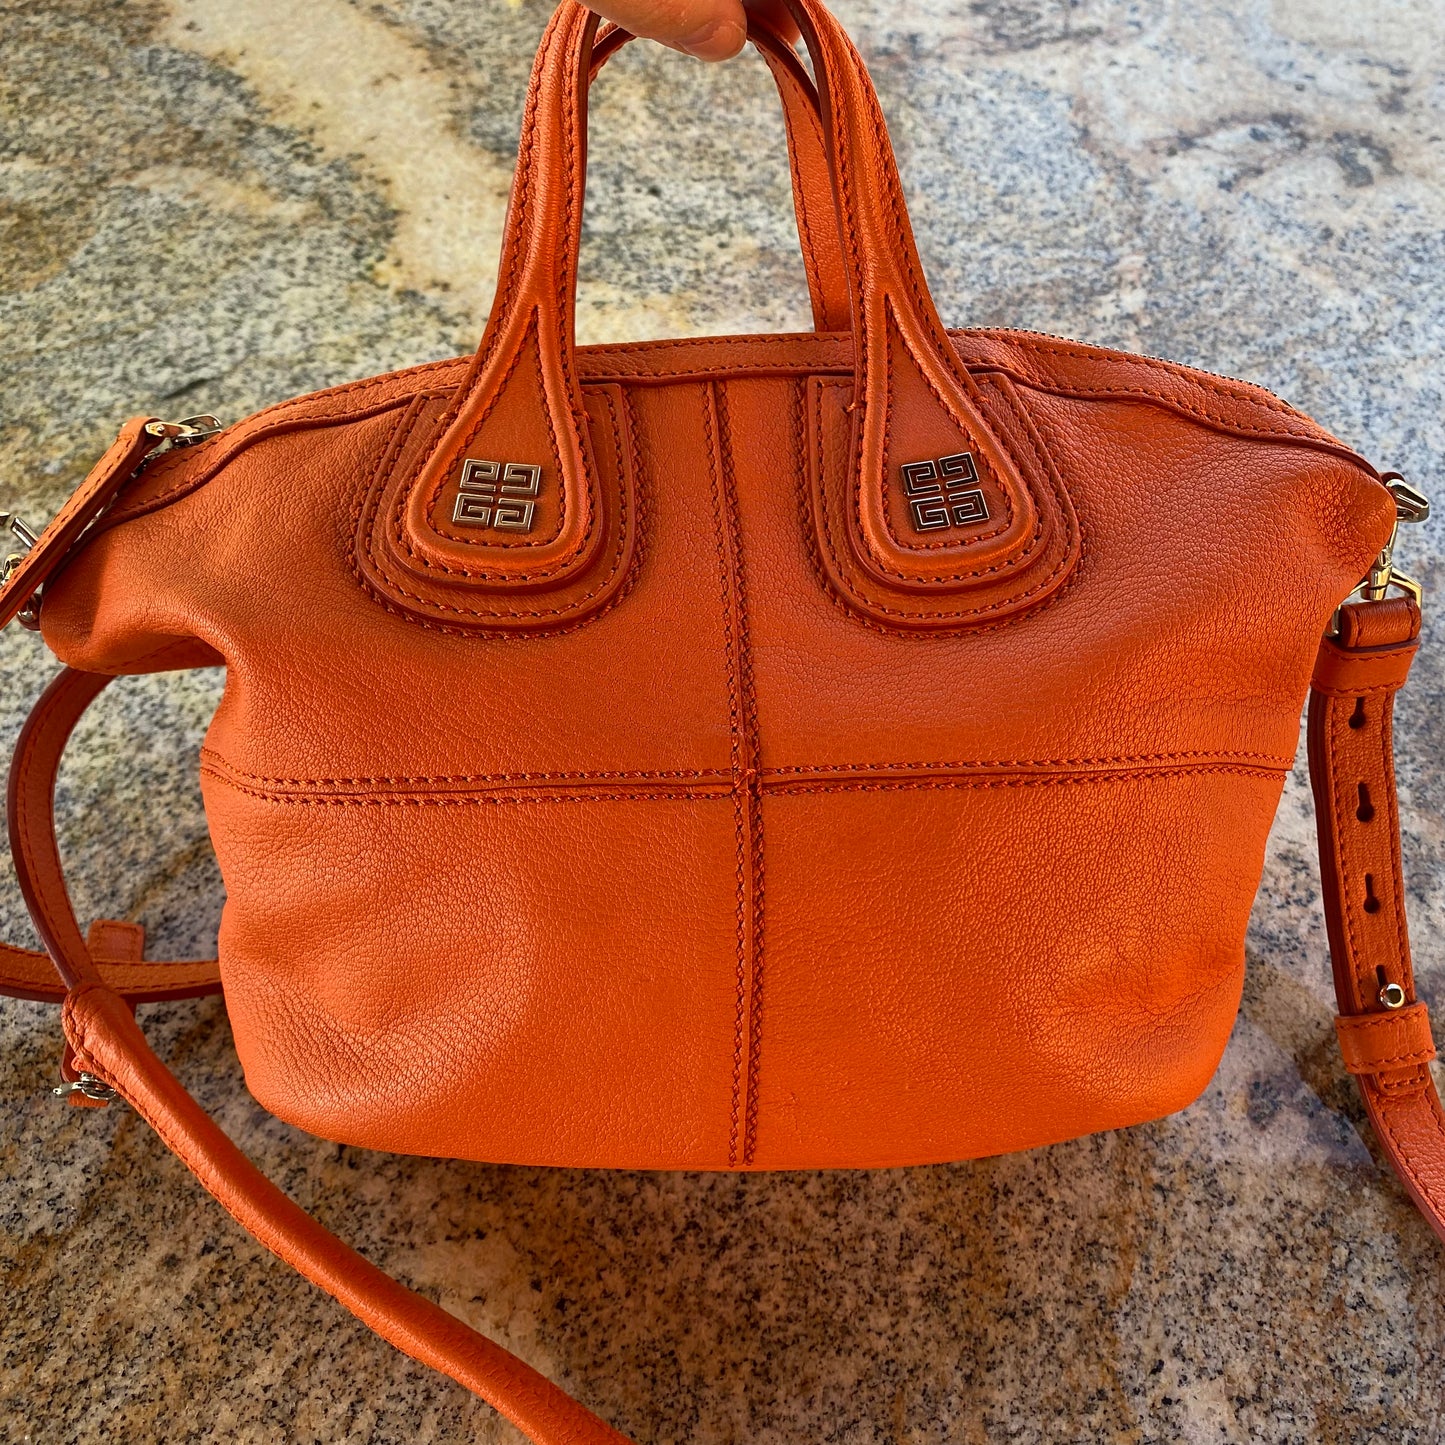 Givenchy Nightingale Micro Leather Bag